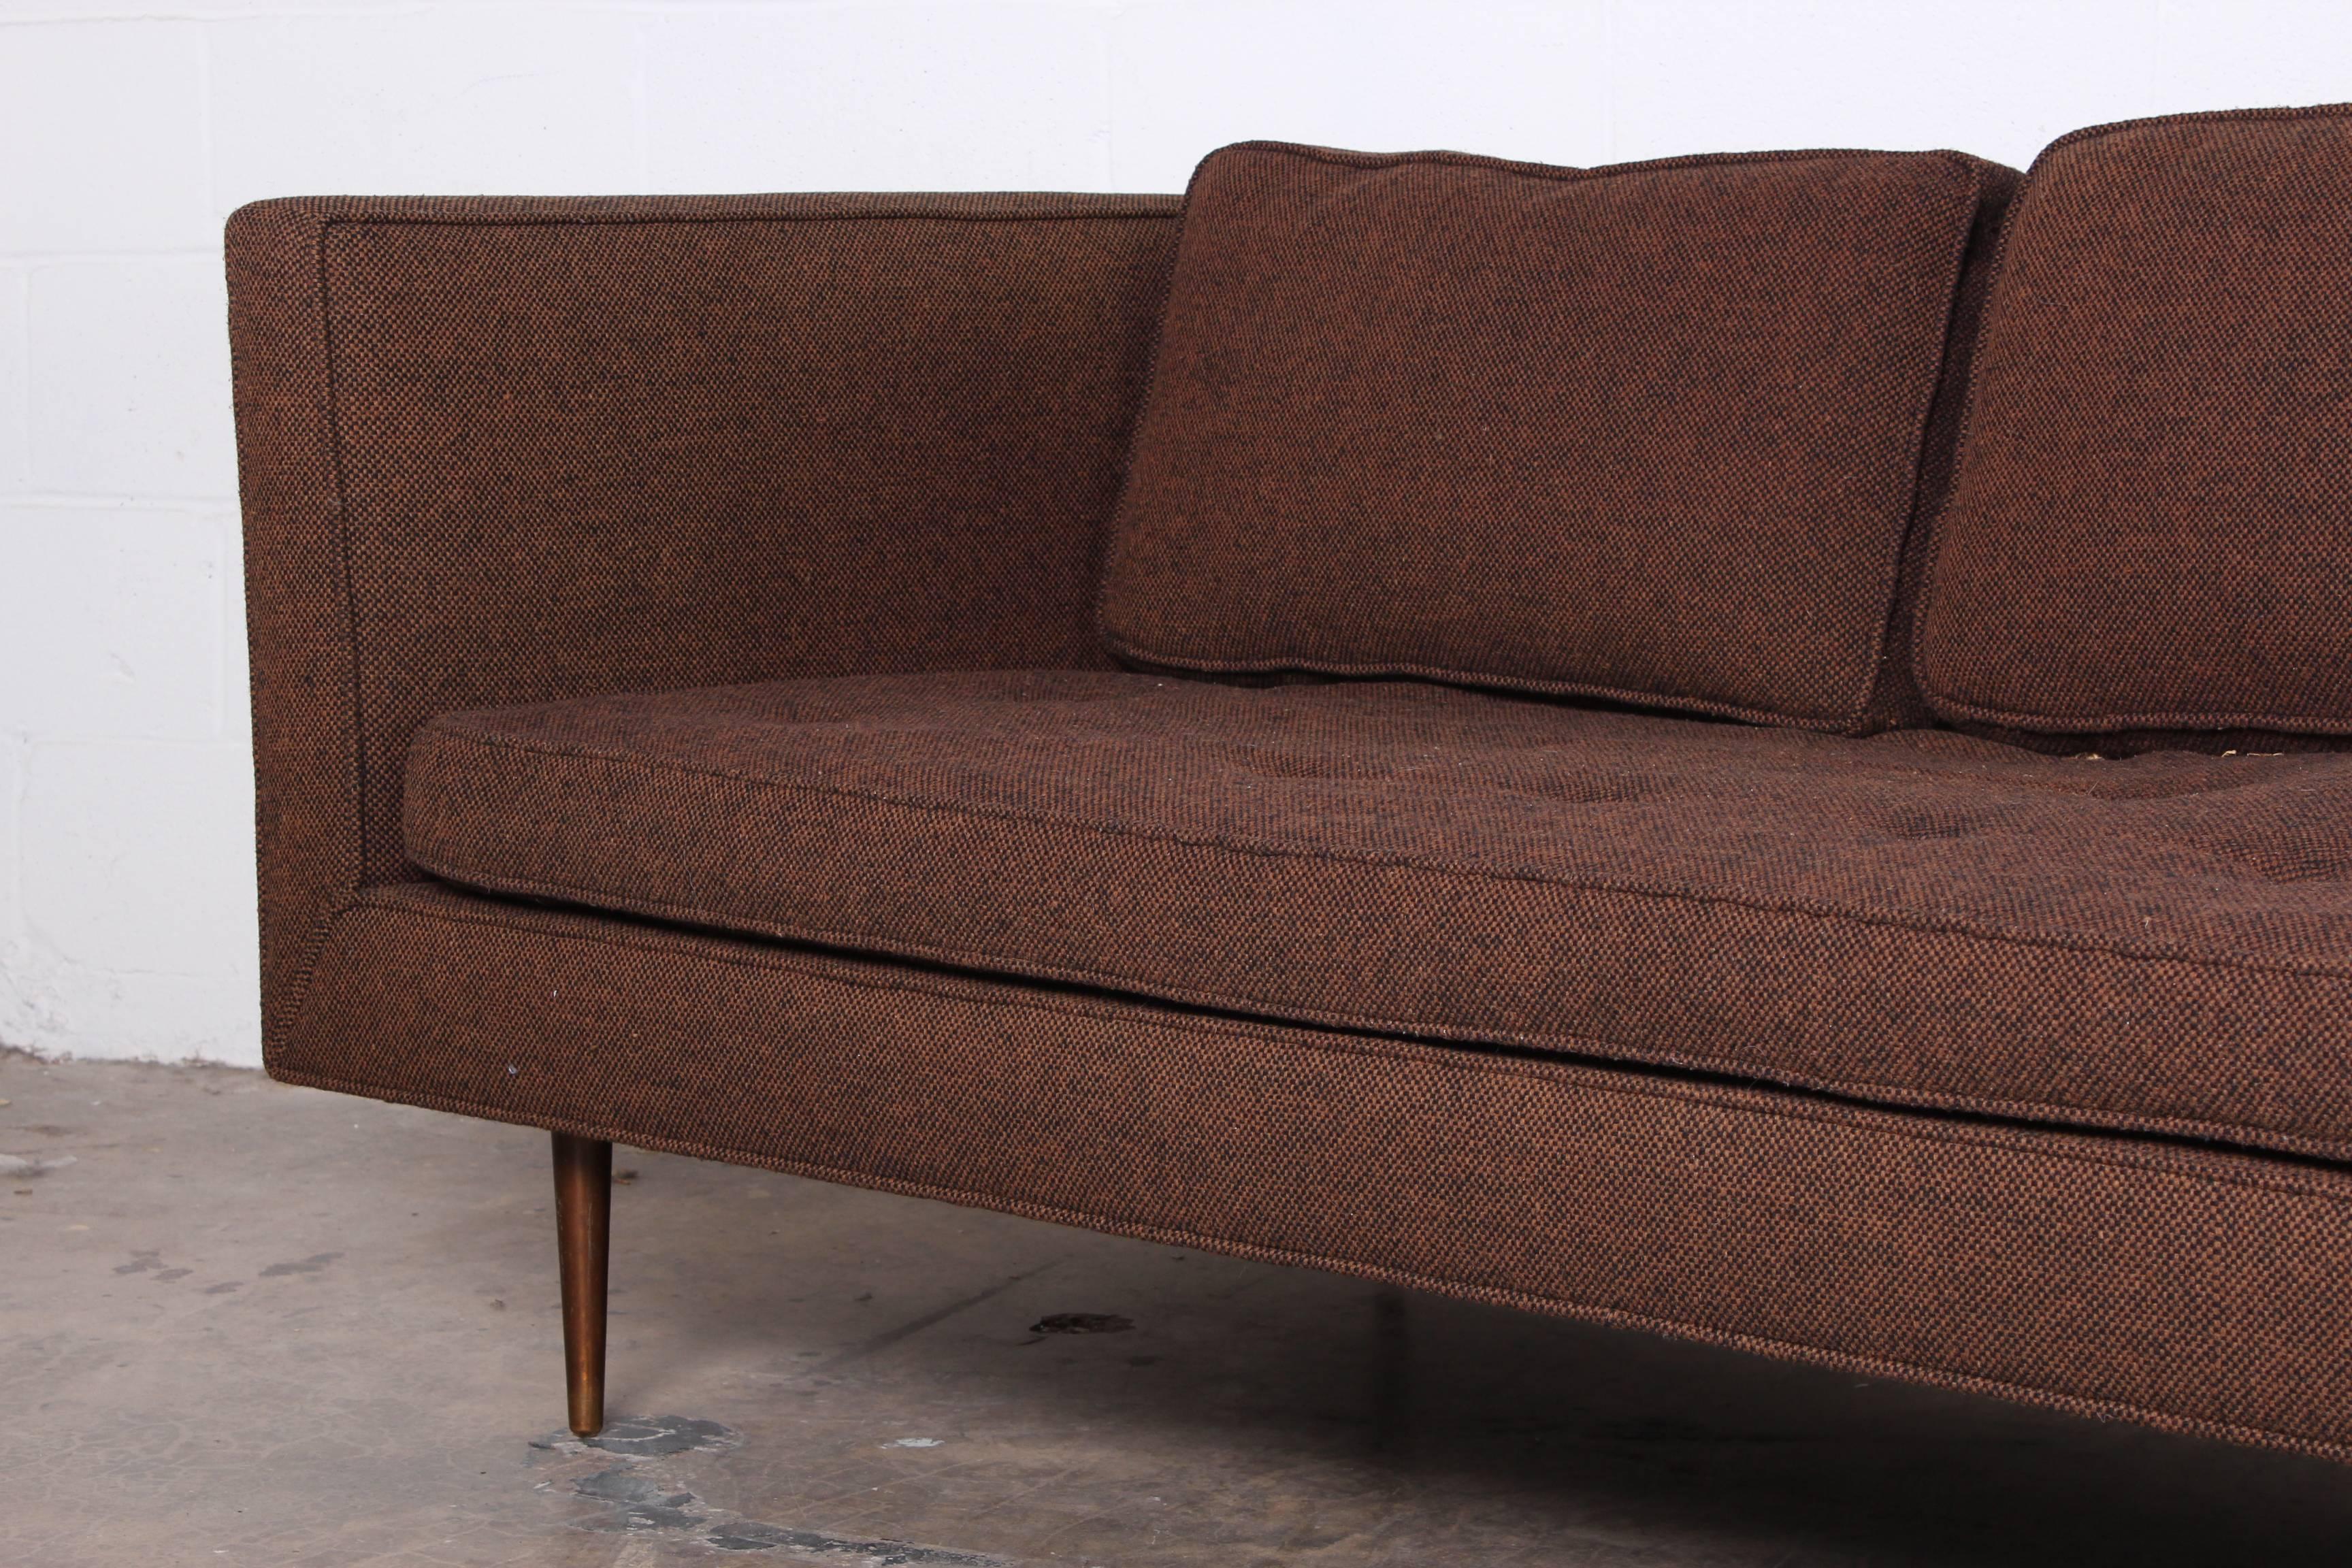 Sofa/Chaise by Edward Wormley for Dunbar For Sale 3